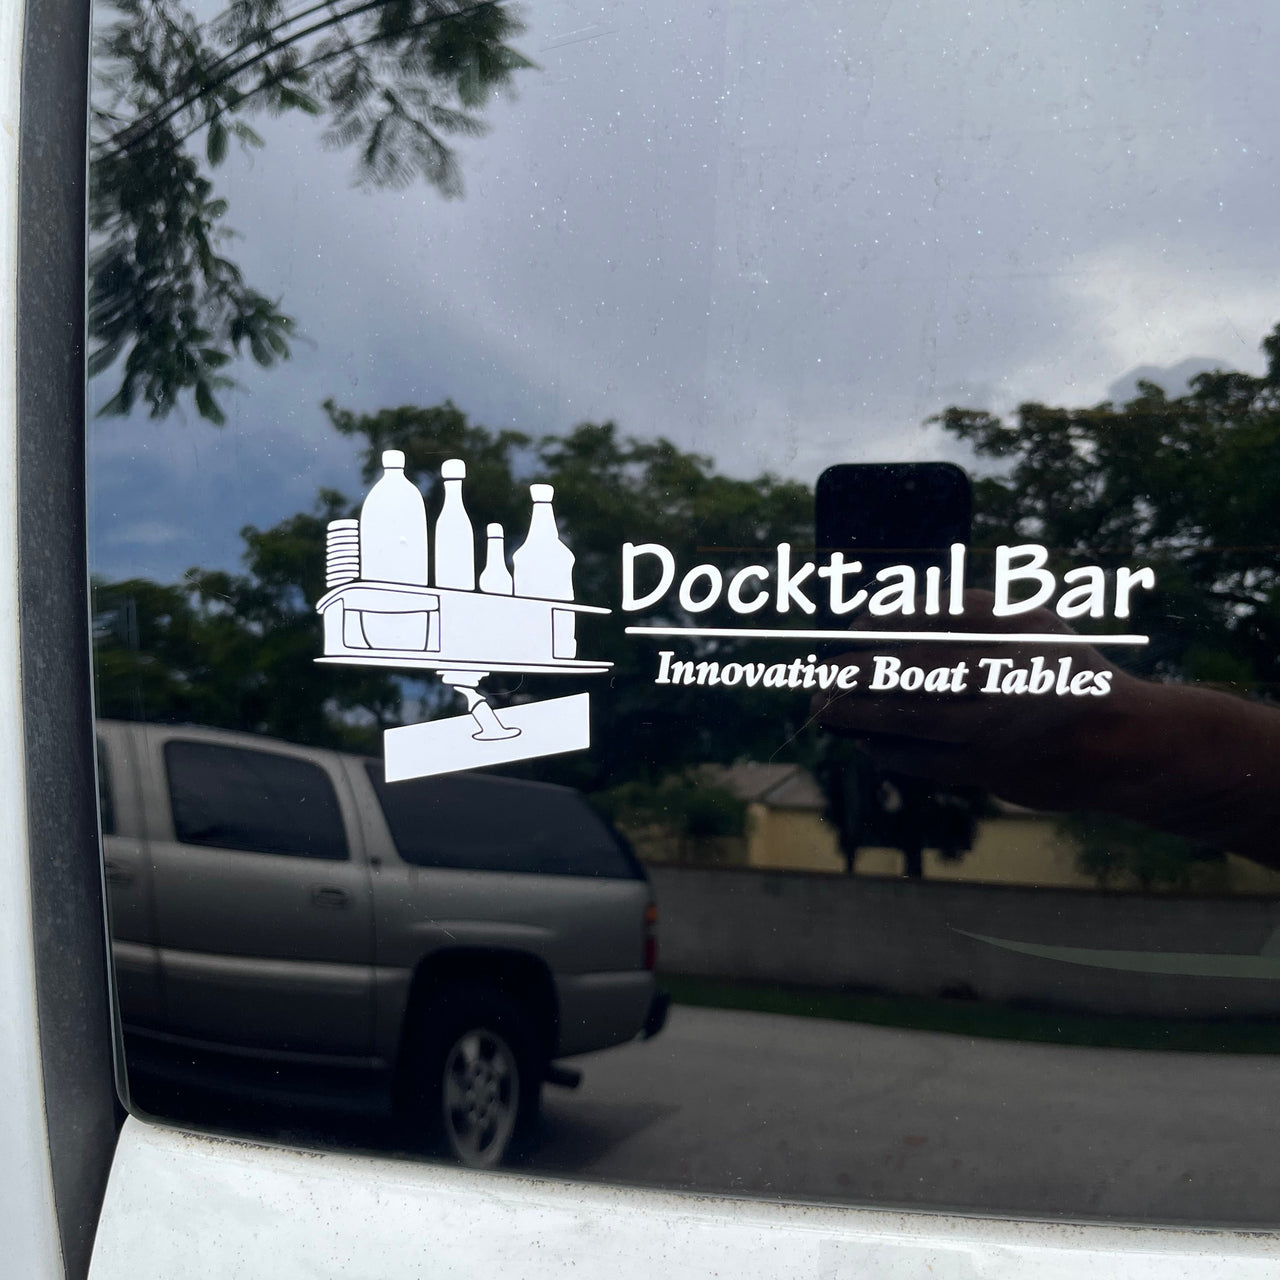 Docktail Bar "Innovative Boat Tables" White Vinyl Window Transfer Sticker - 7.25" x 3"